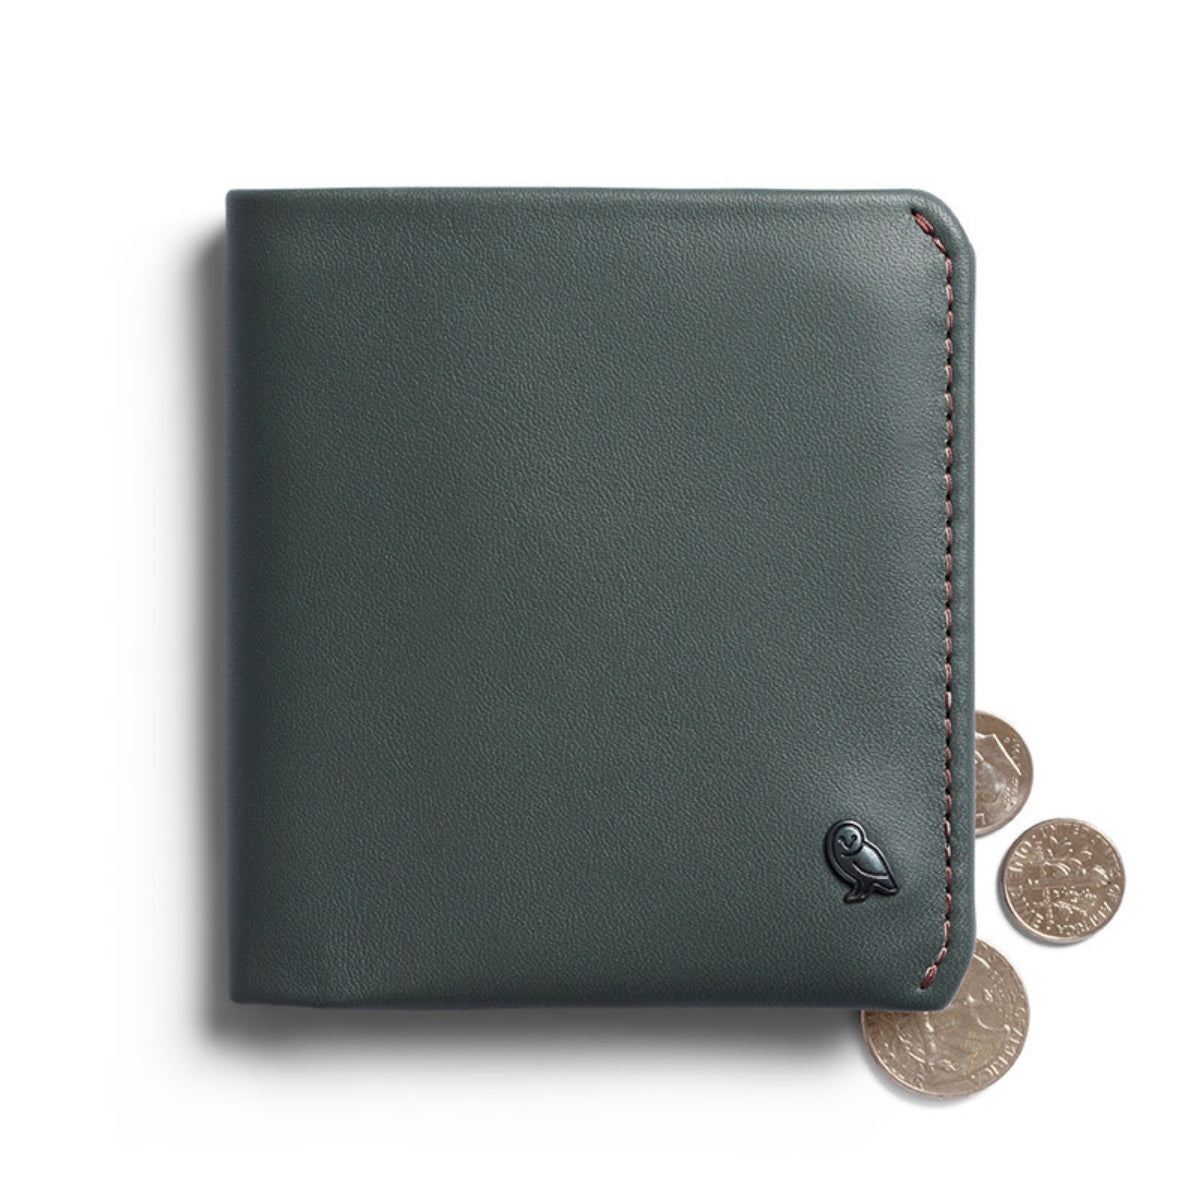 Bellroy Coin Wallet in Evergreen